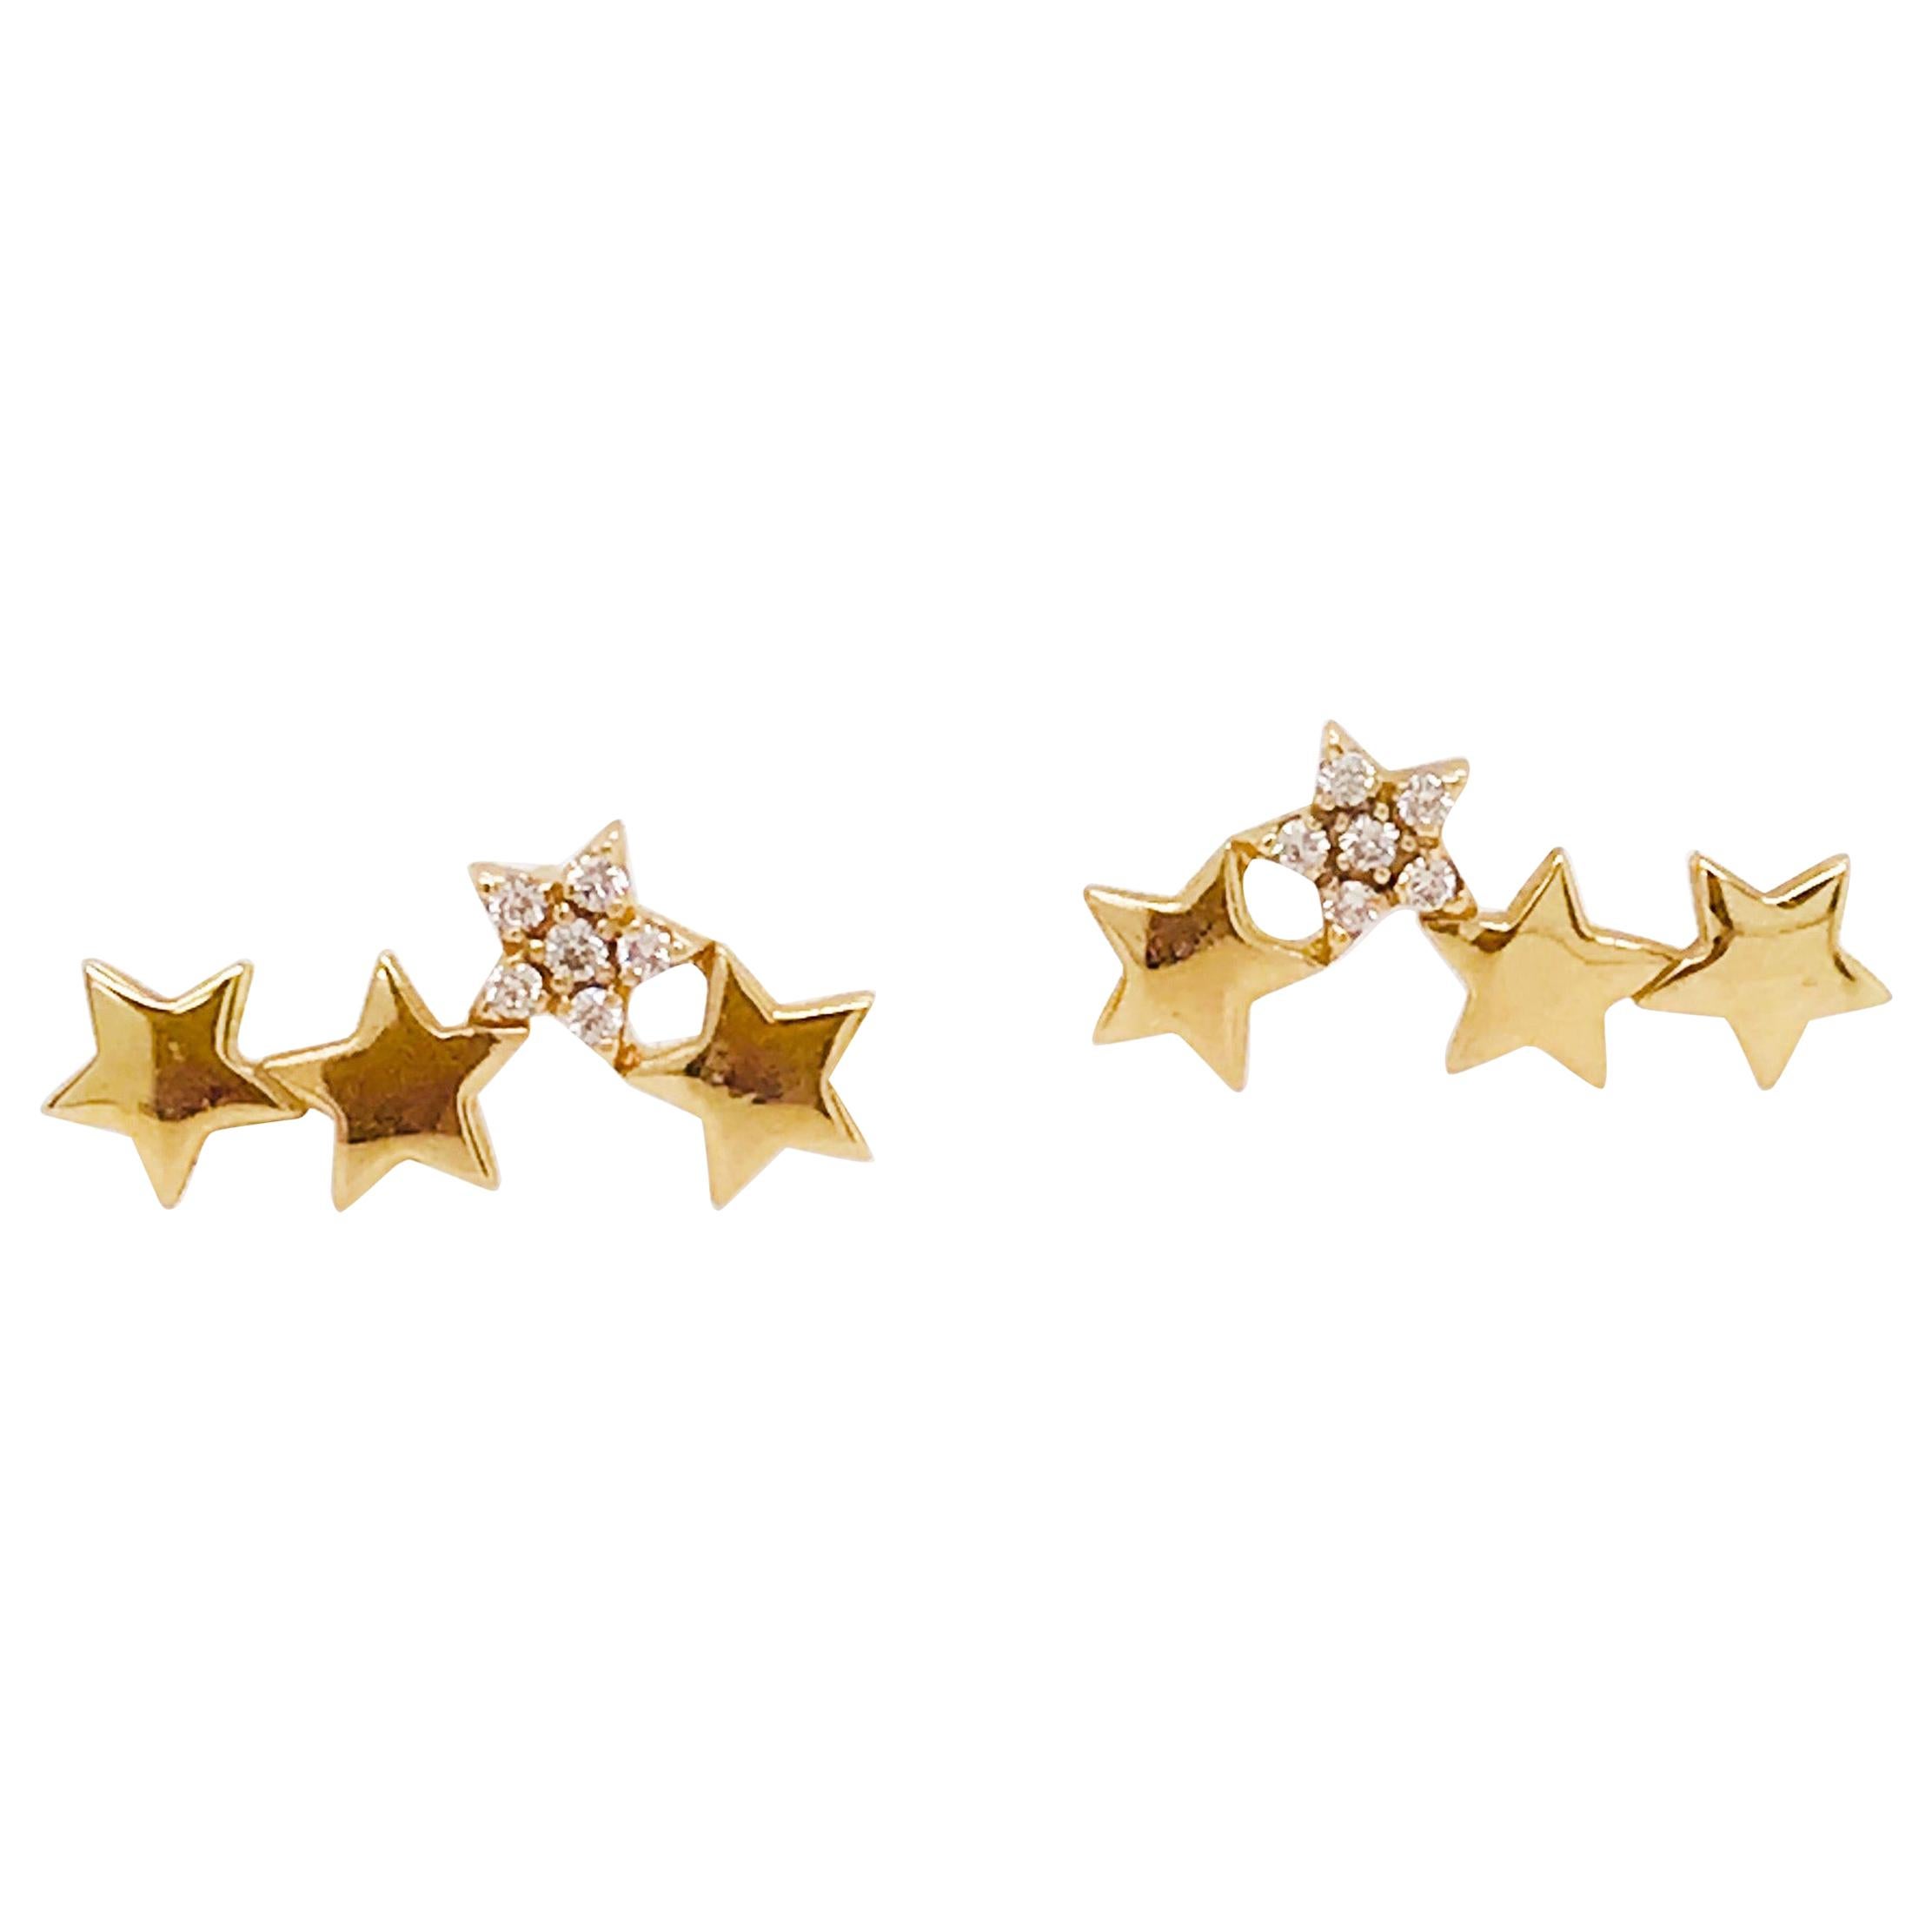 0.10 Carat Diamond Star Ear Climbers 14 Karat Gold, Diamond Star Earring Studs